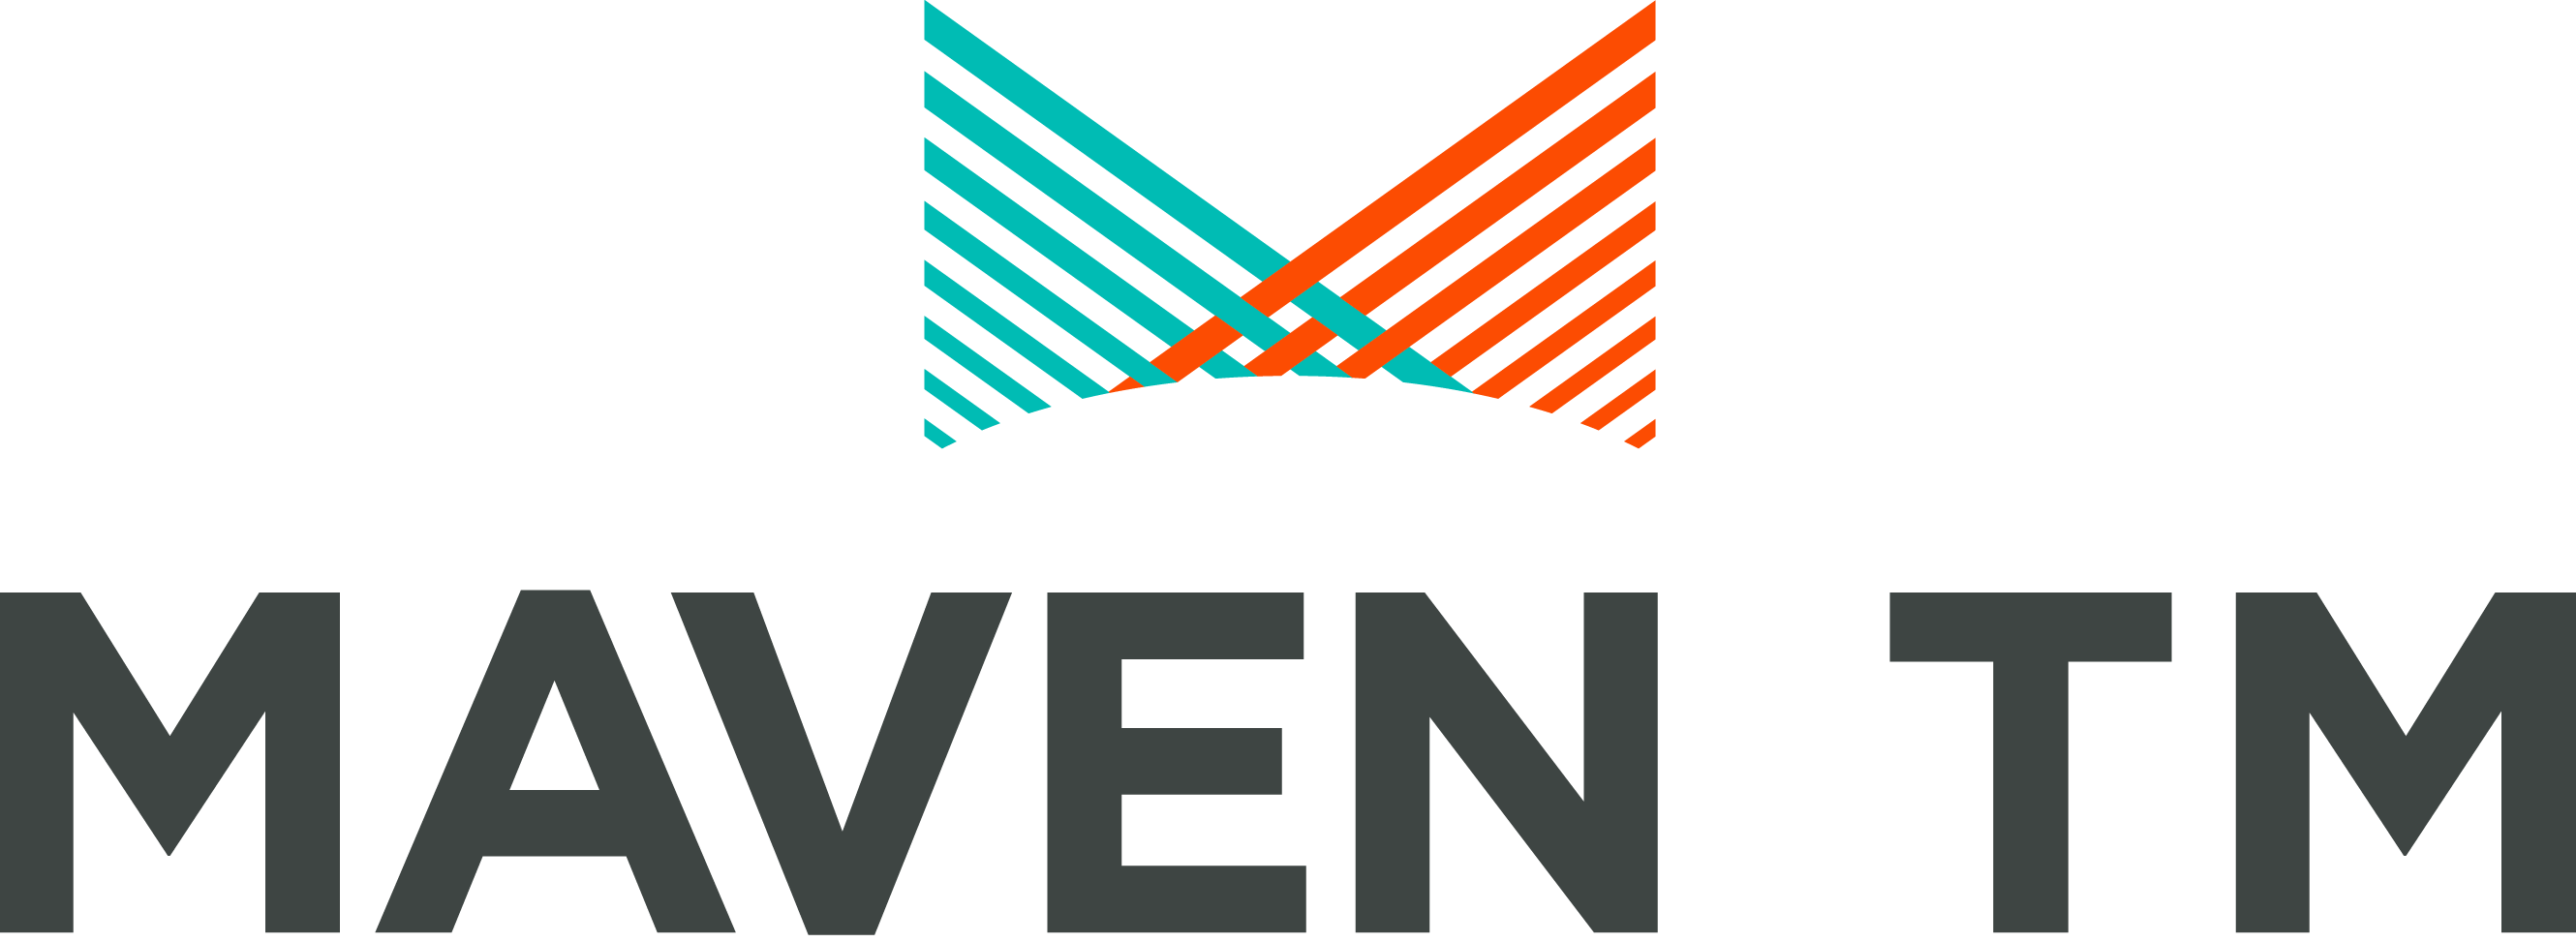 6066 16 Maven TM Logo positive RGB (2)